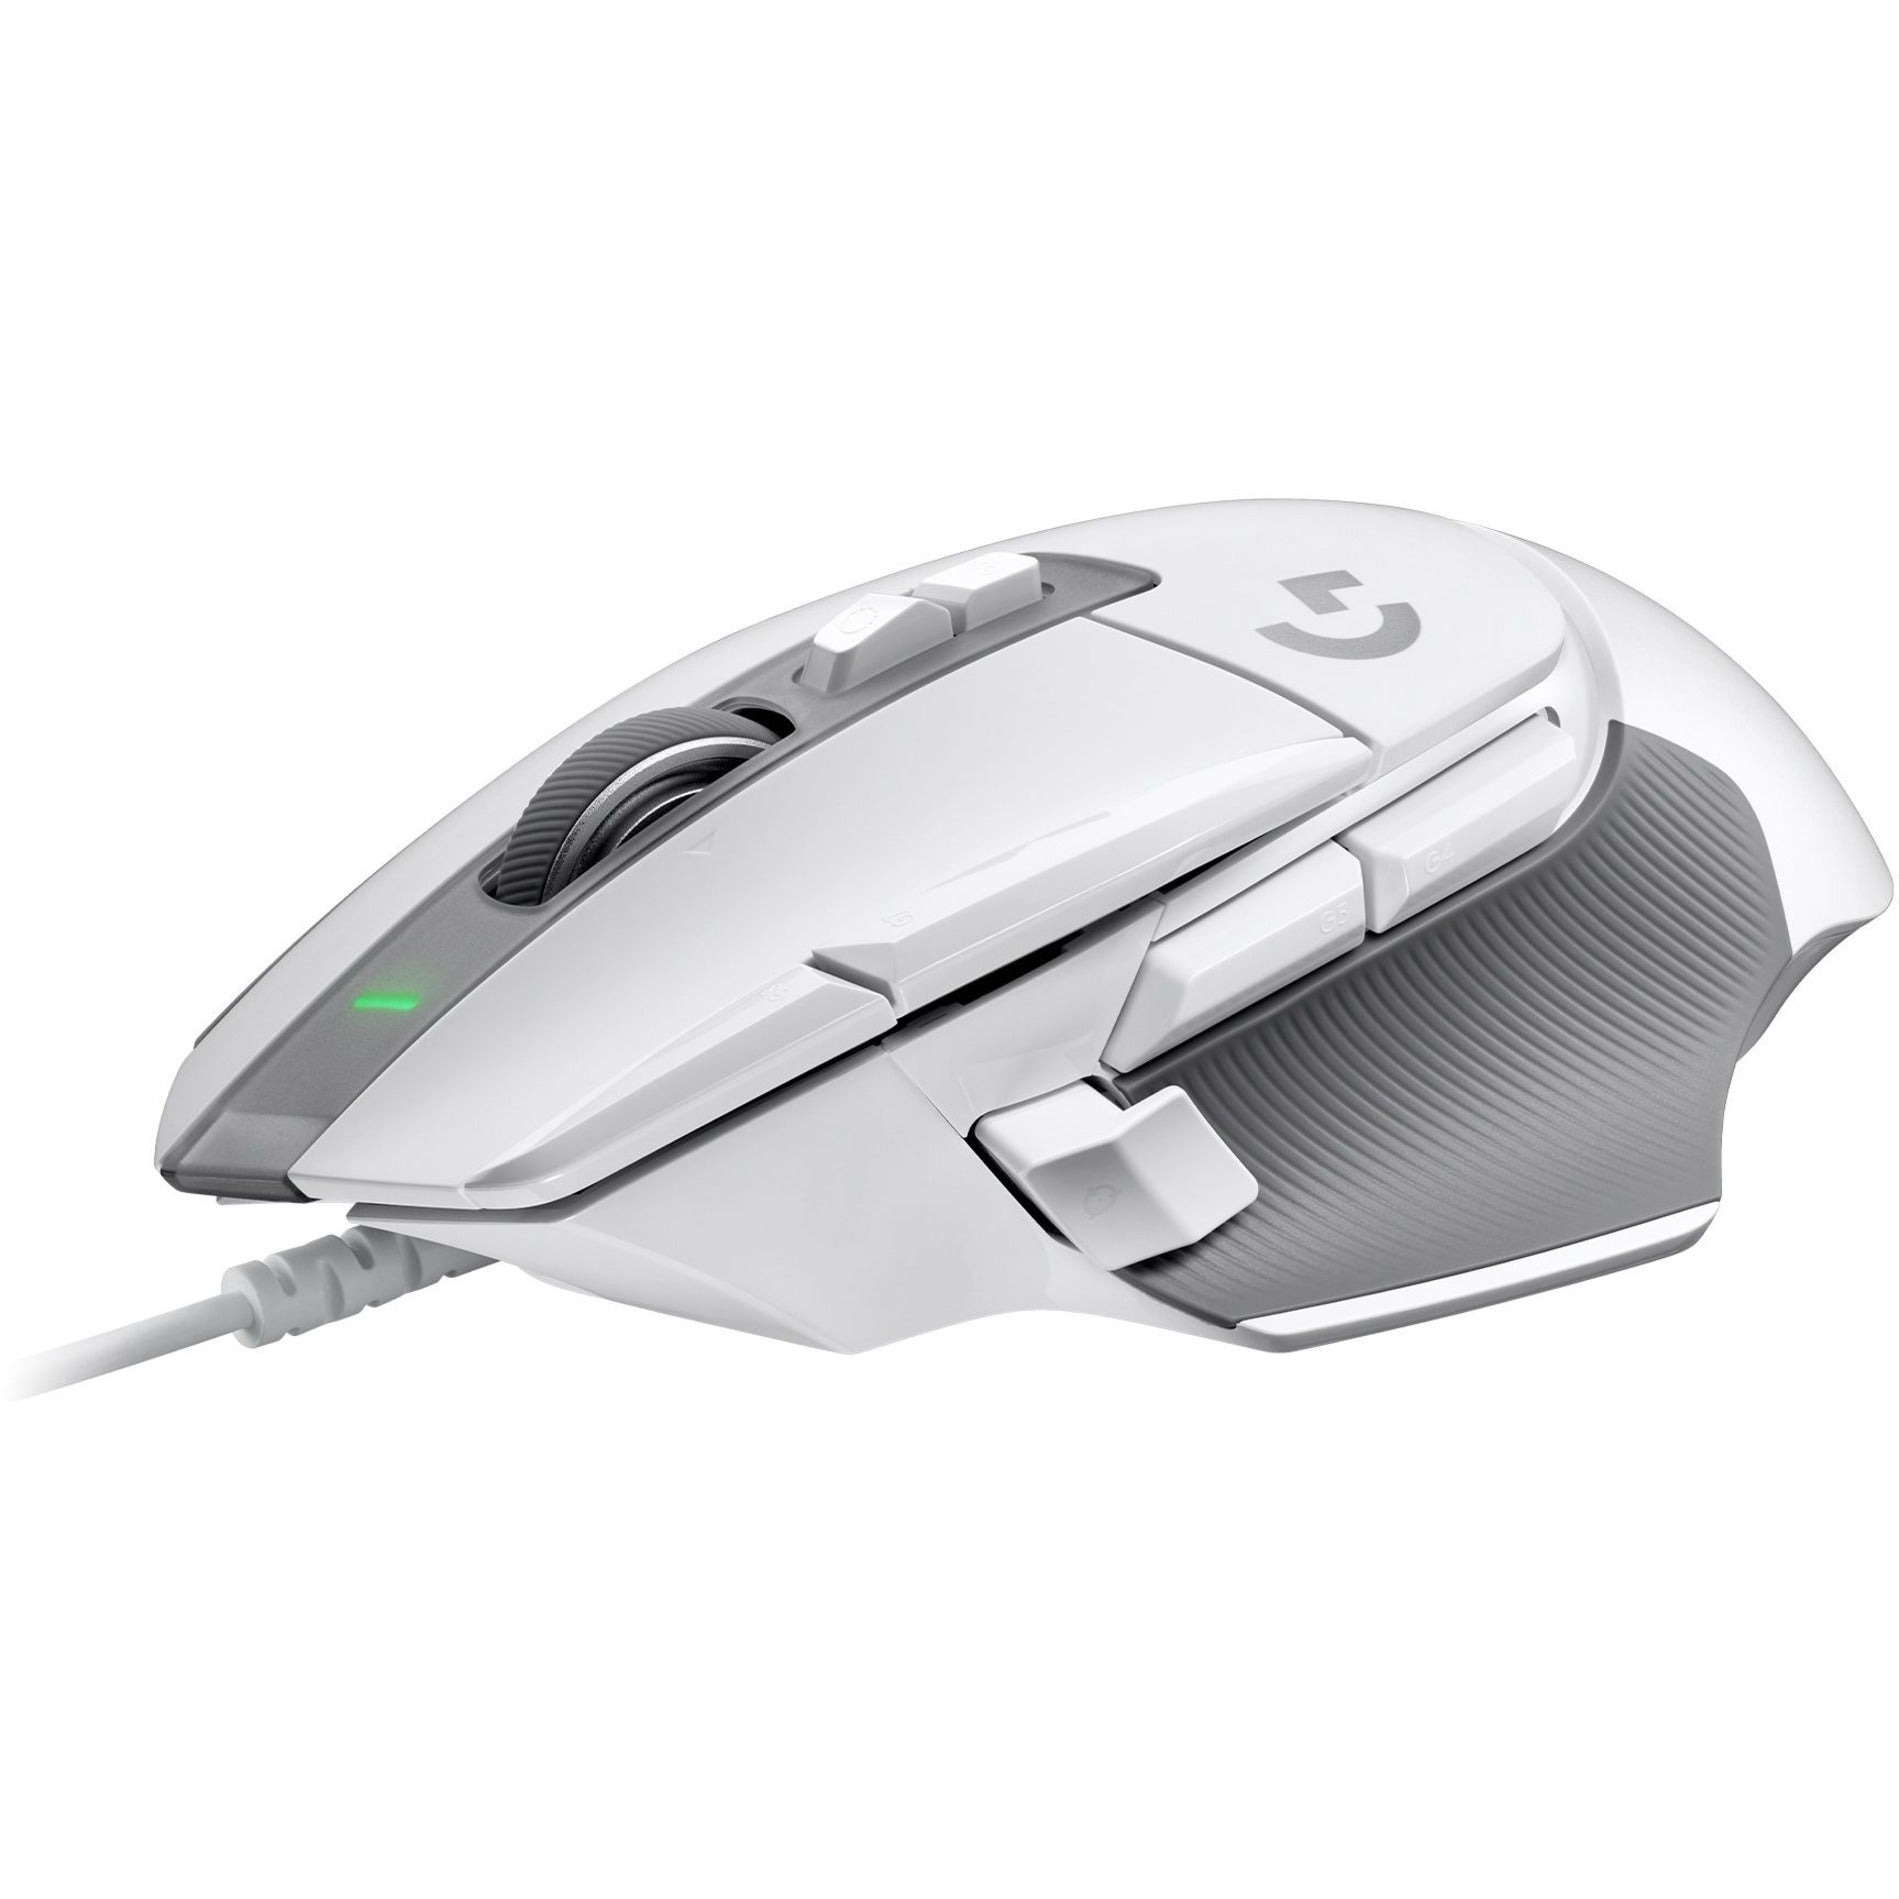 Logitech G 910-006144 G502 X Gaming Mouse, High Precision Optical Sensor, 25600 DPI, USB Wired, White